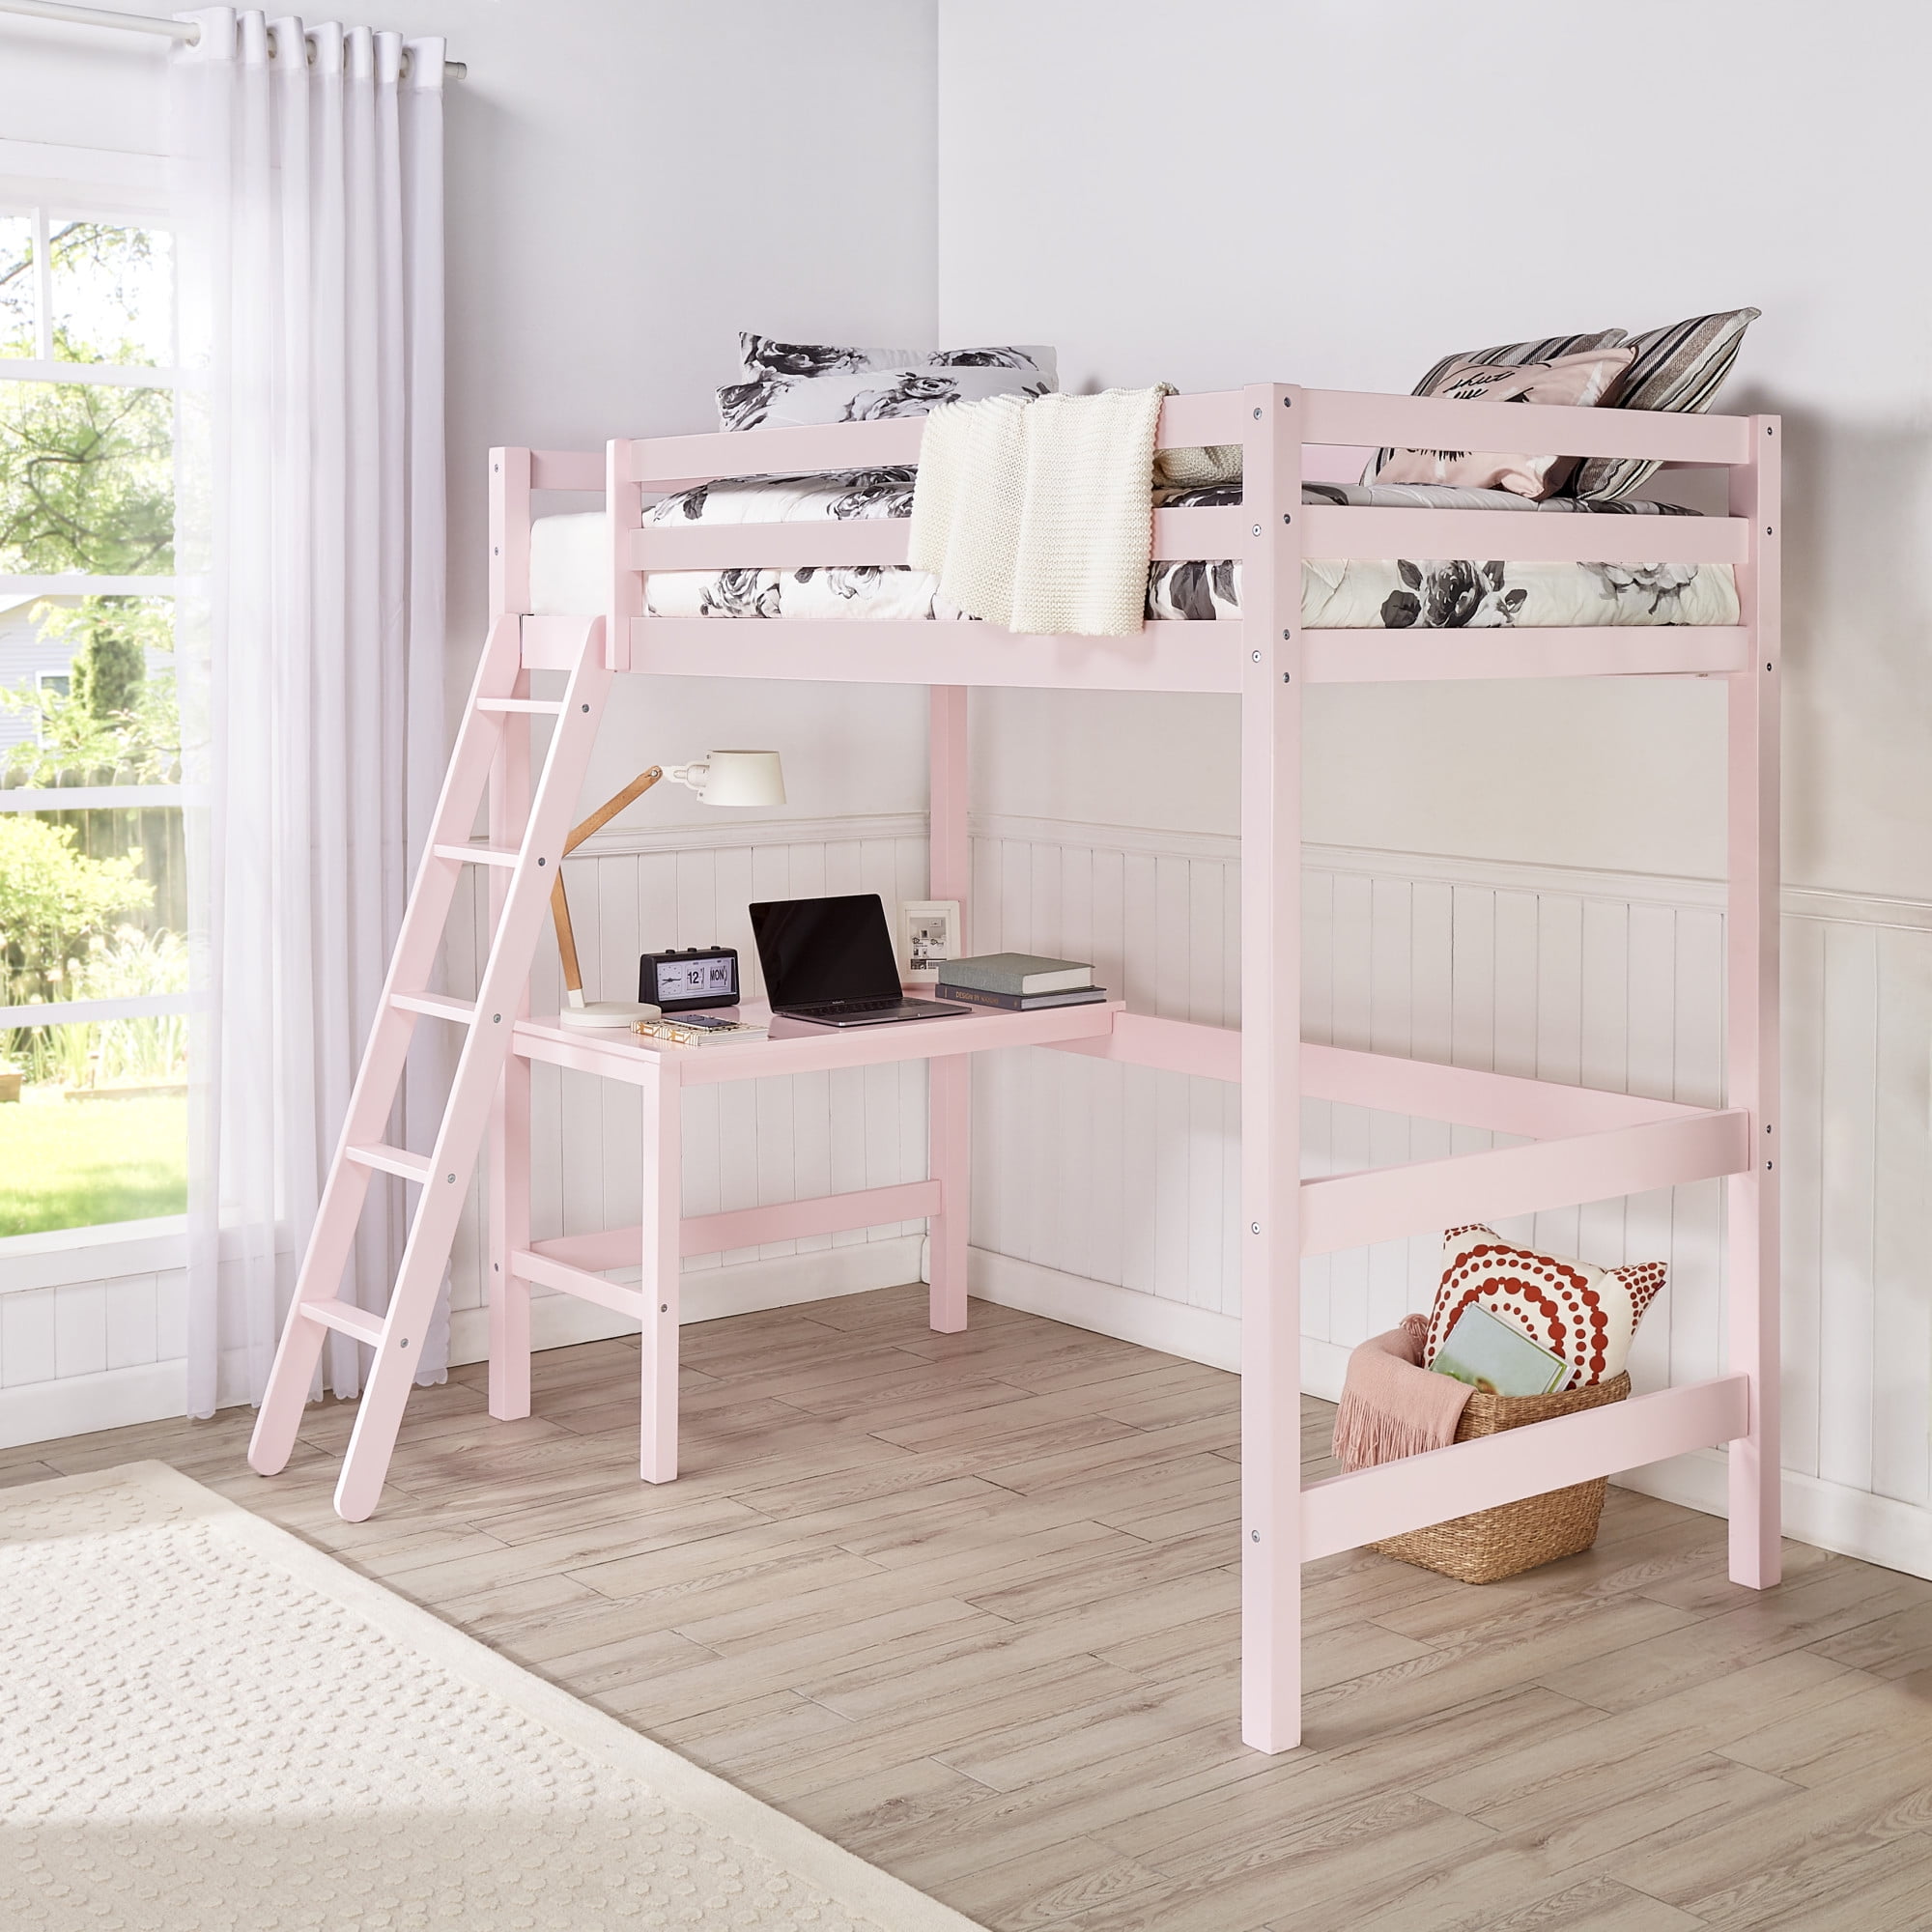 Hillsdale Caspian Wood Study Twin Loft Bed with Desk, Pink